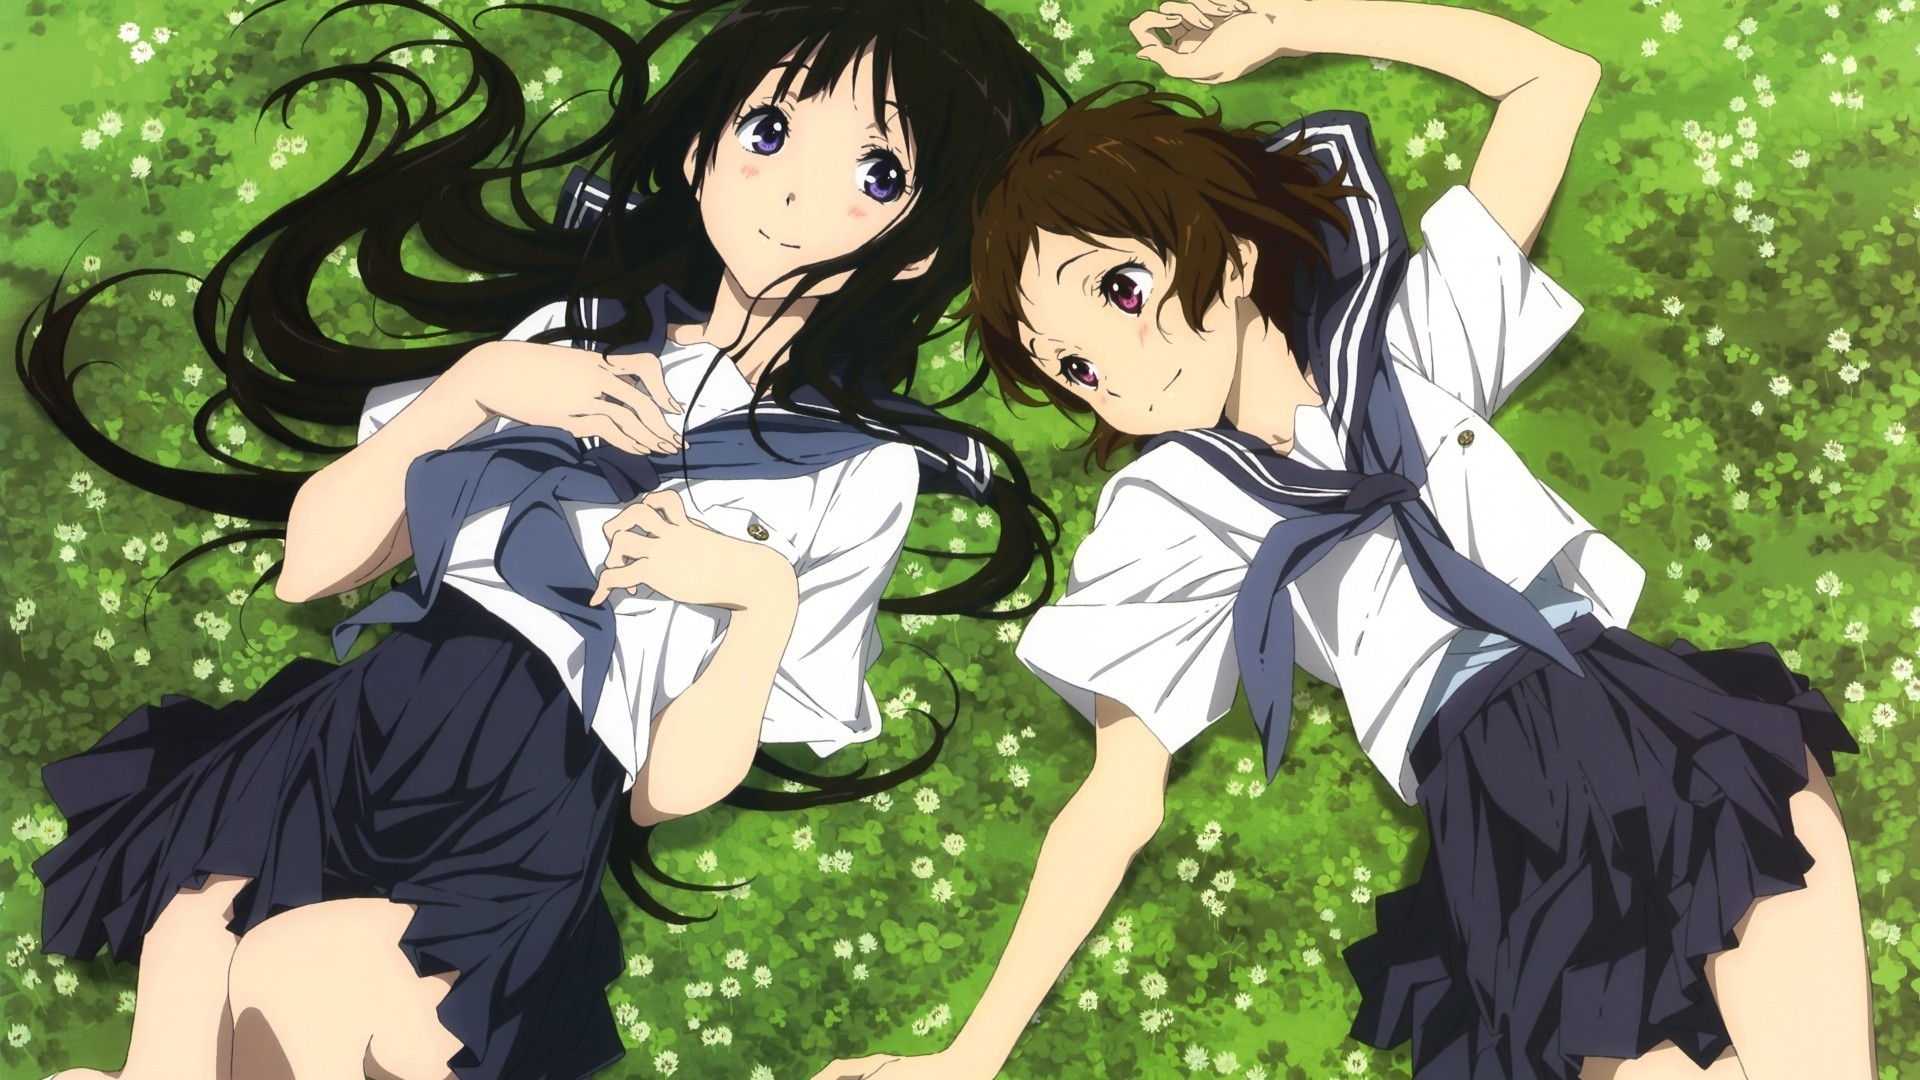 girls, anime, dress Wallpaper, HD Anime 4K Wallpapers, Images, Photos